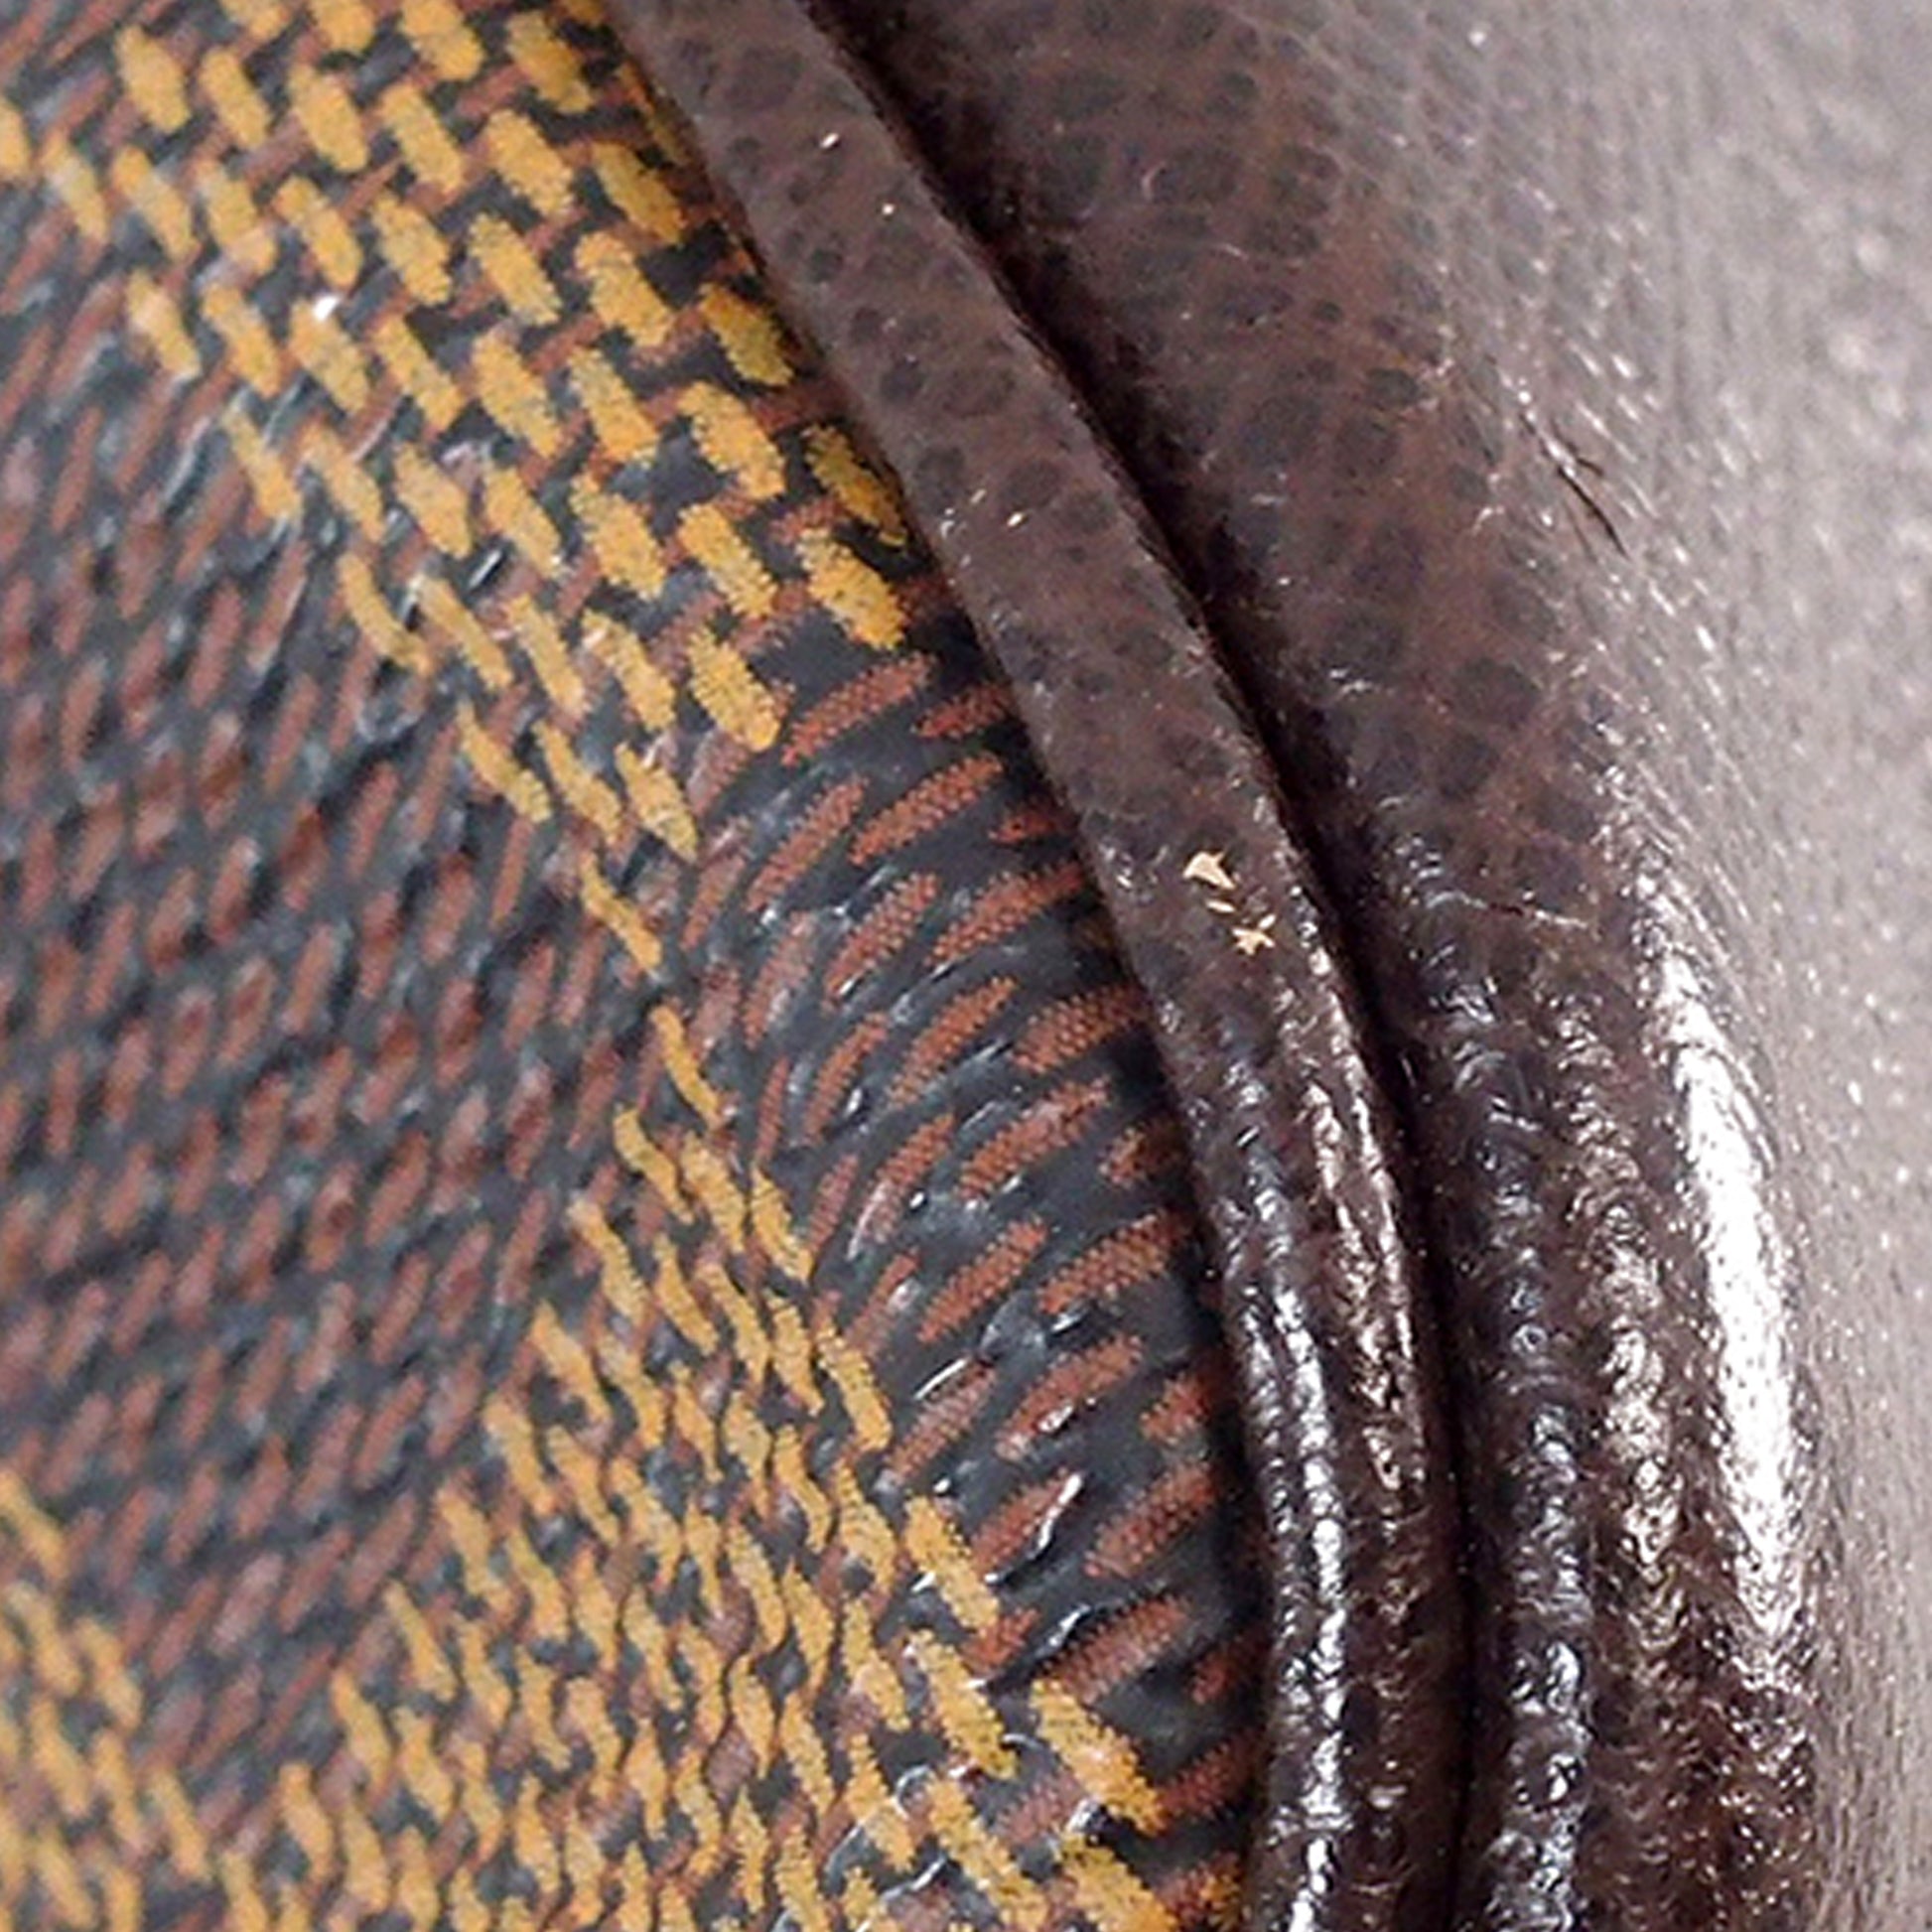 Félicie Pochette Damier Ebene - Women - Small Leather Goods